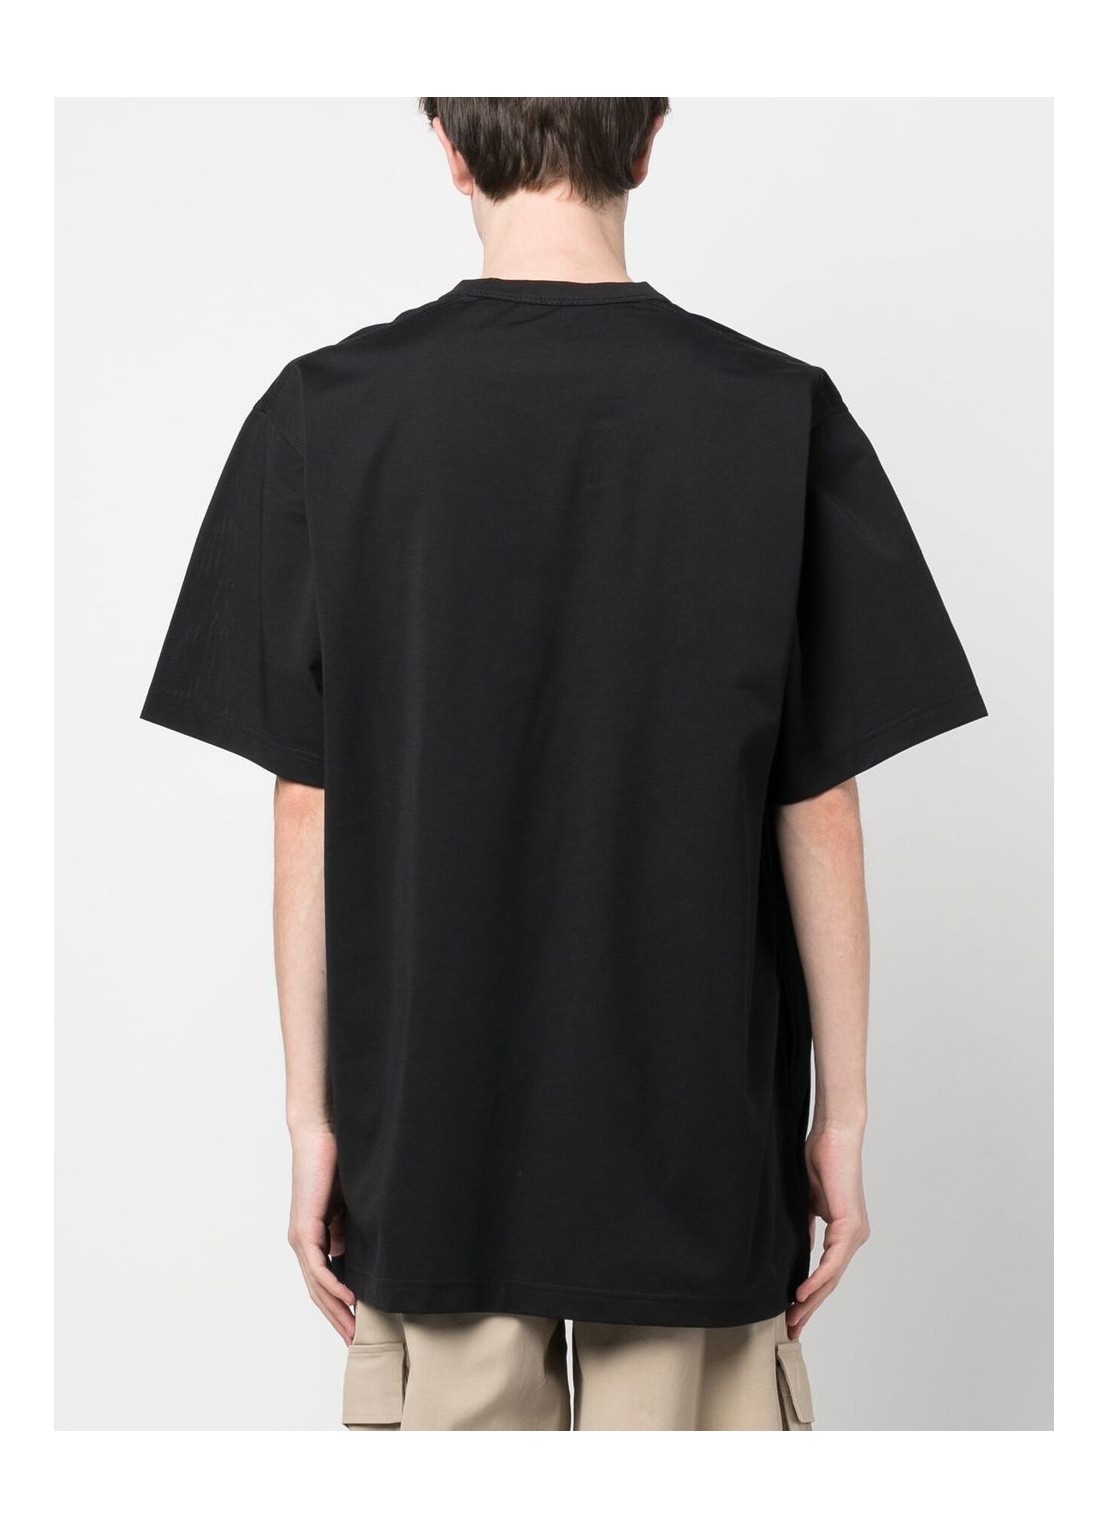 y3 t-shirt man premium ss tee h44789 black Talla S Color negro